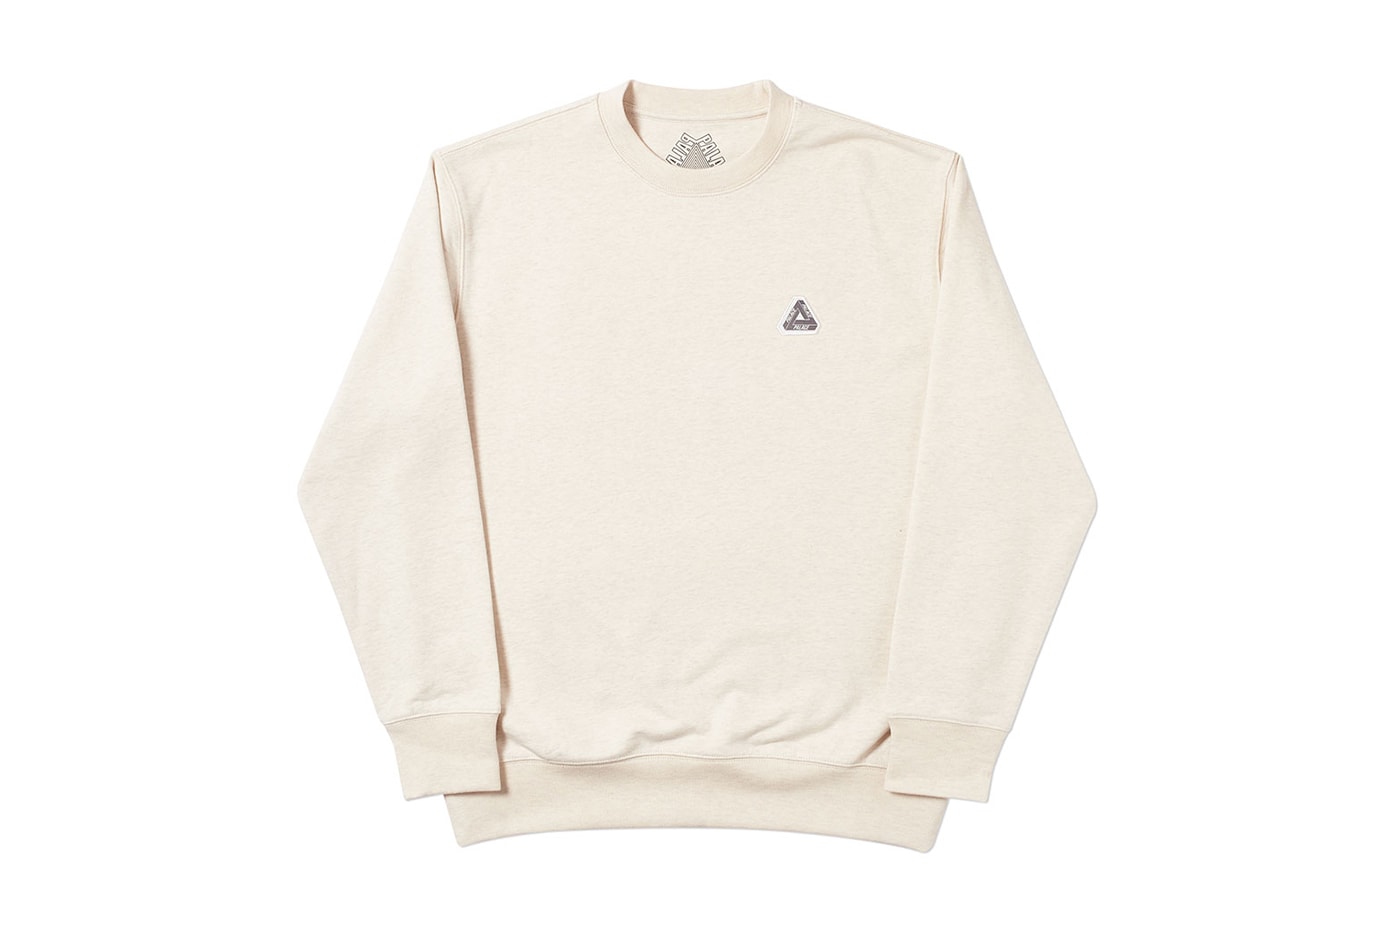 Palace 2019 Summer Sweatshirts hoodies pullover crewnecks triferg logo branding graphic shirt rugby polo